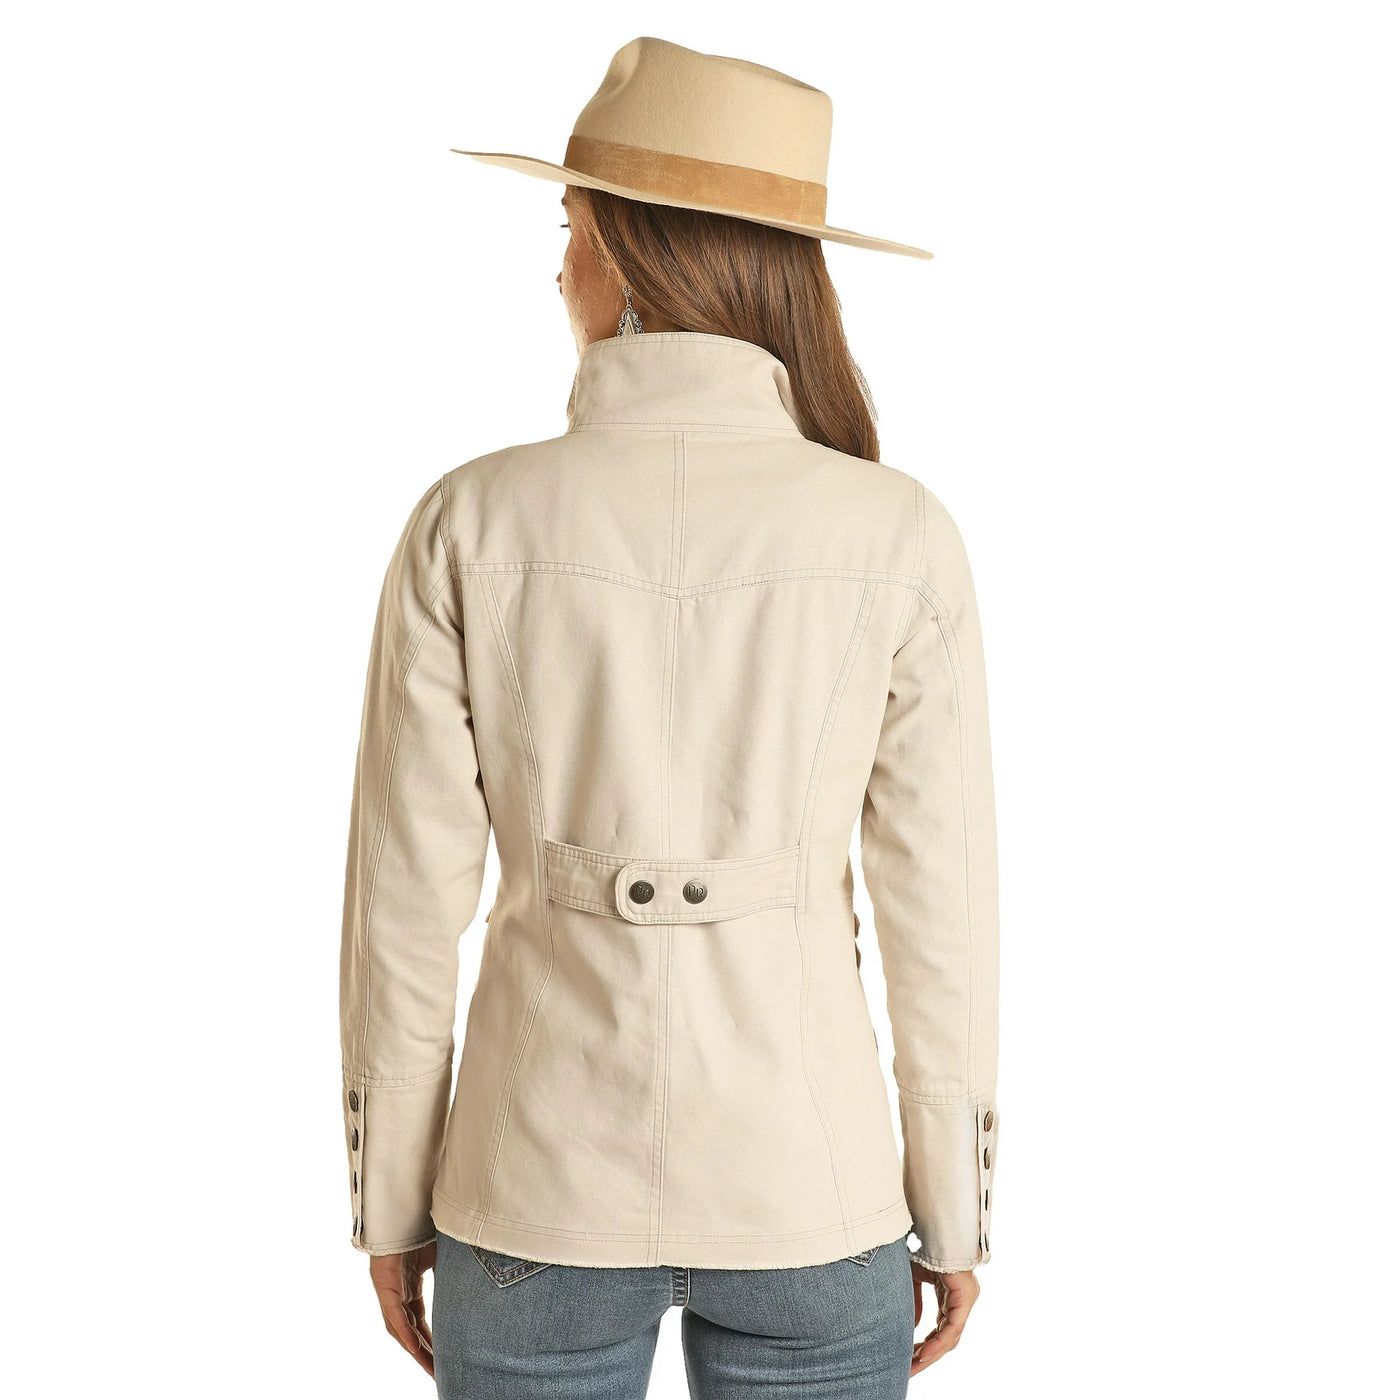 Powder River Women's Cotton Canvas Natural Jacket